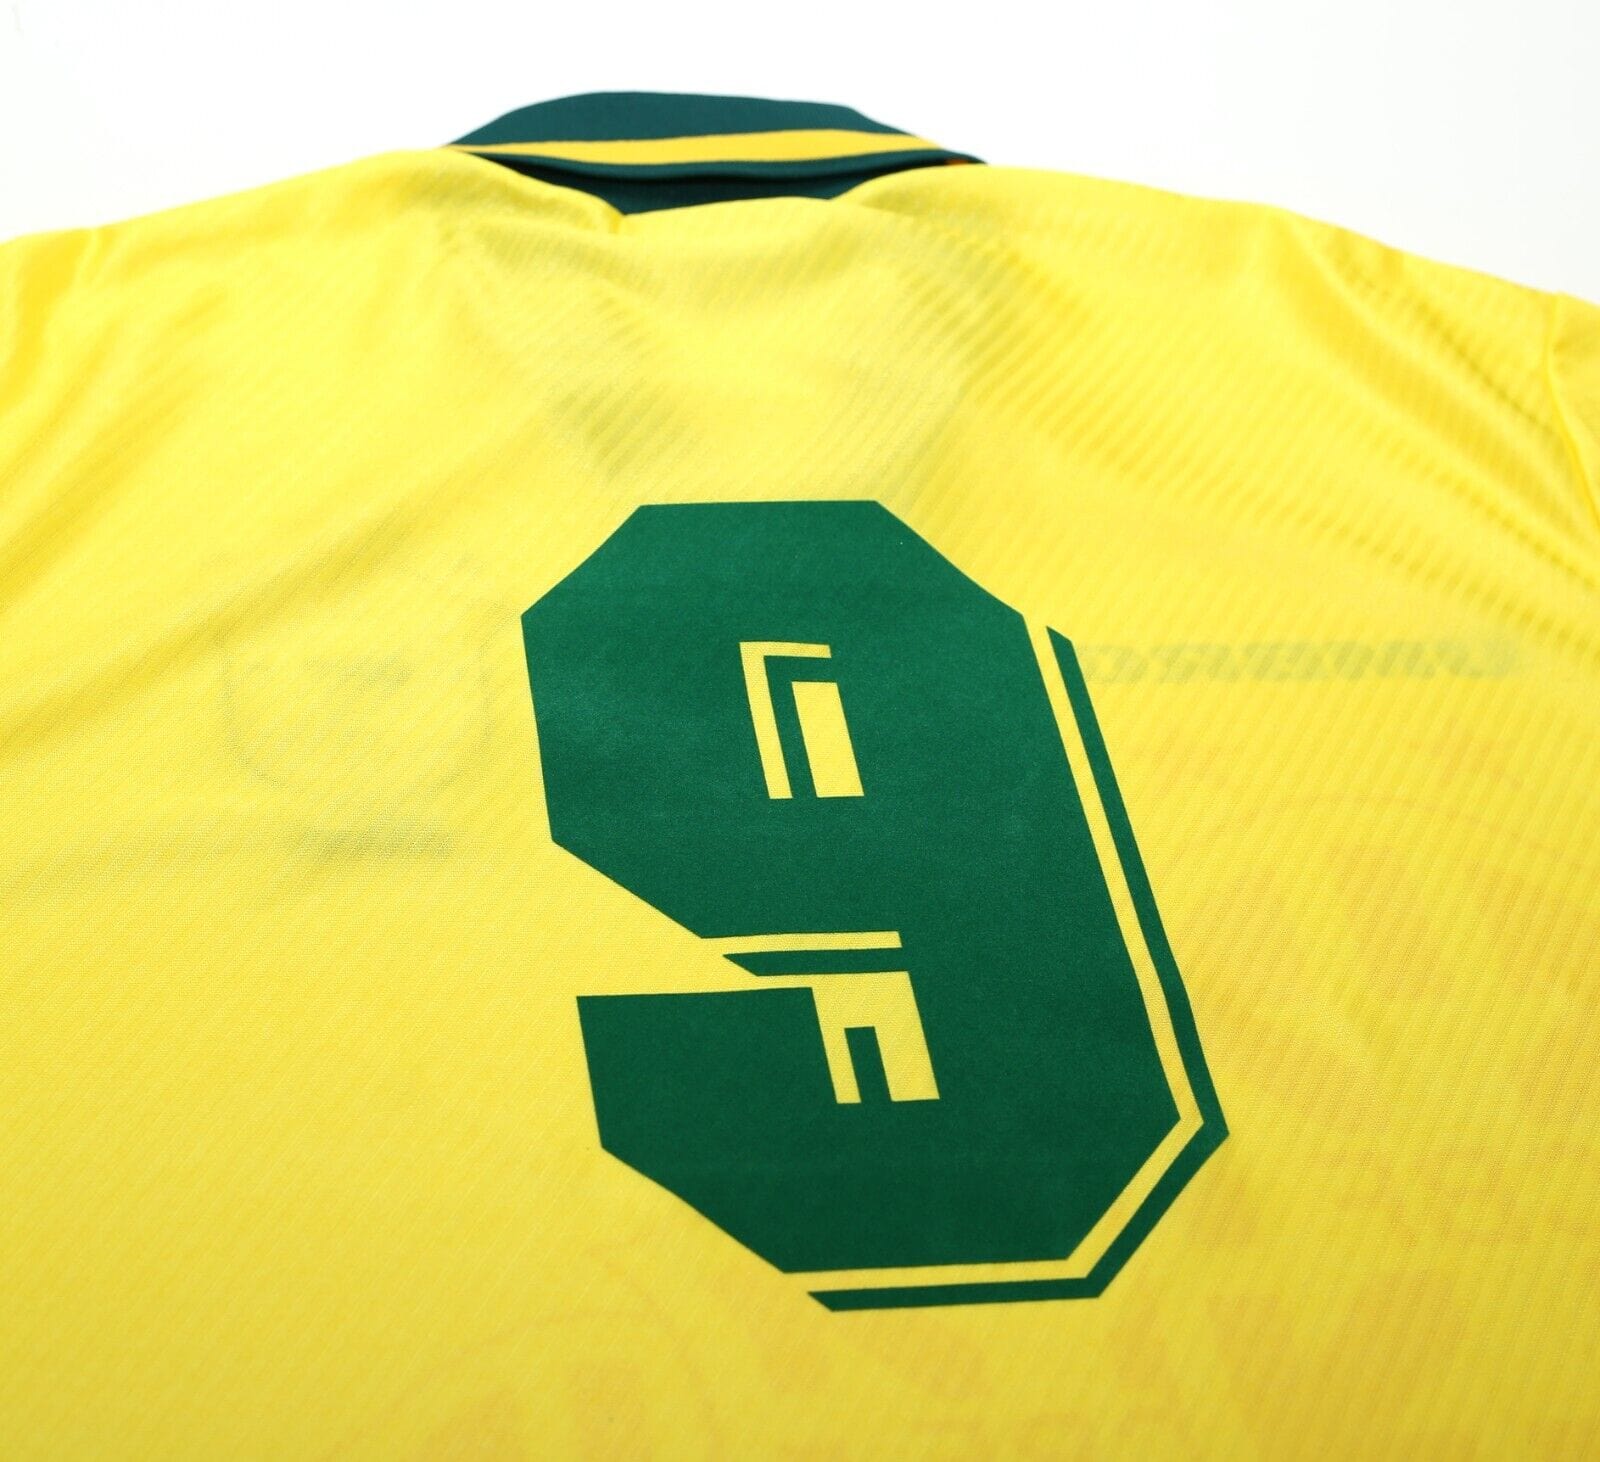 Brazil Football Shirt (home, 1994-1997)  Football shirts, Classic football  shirts, Football team shirts